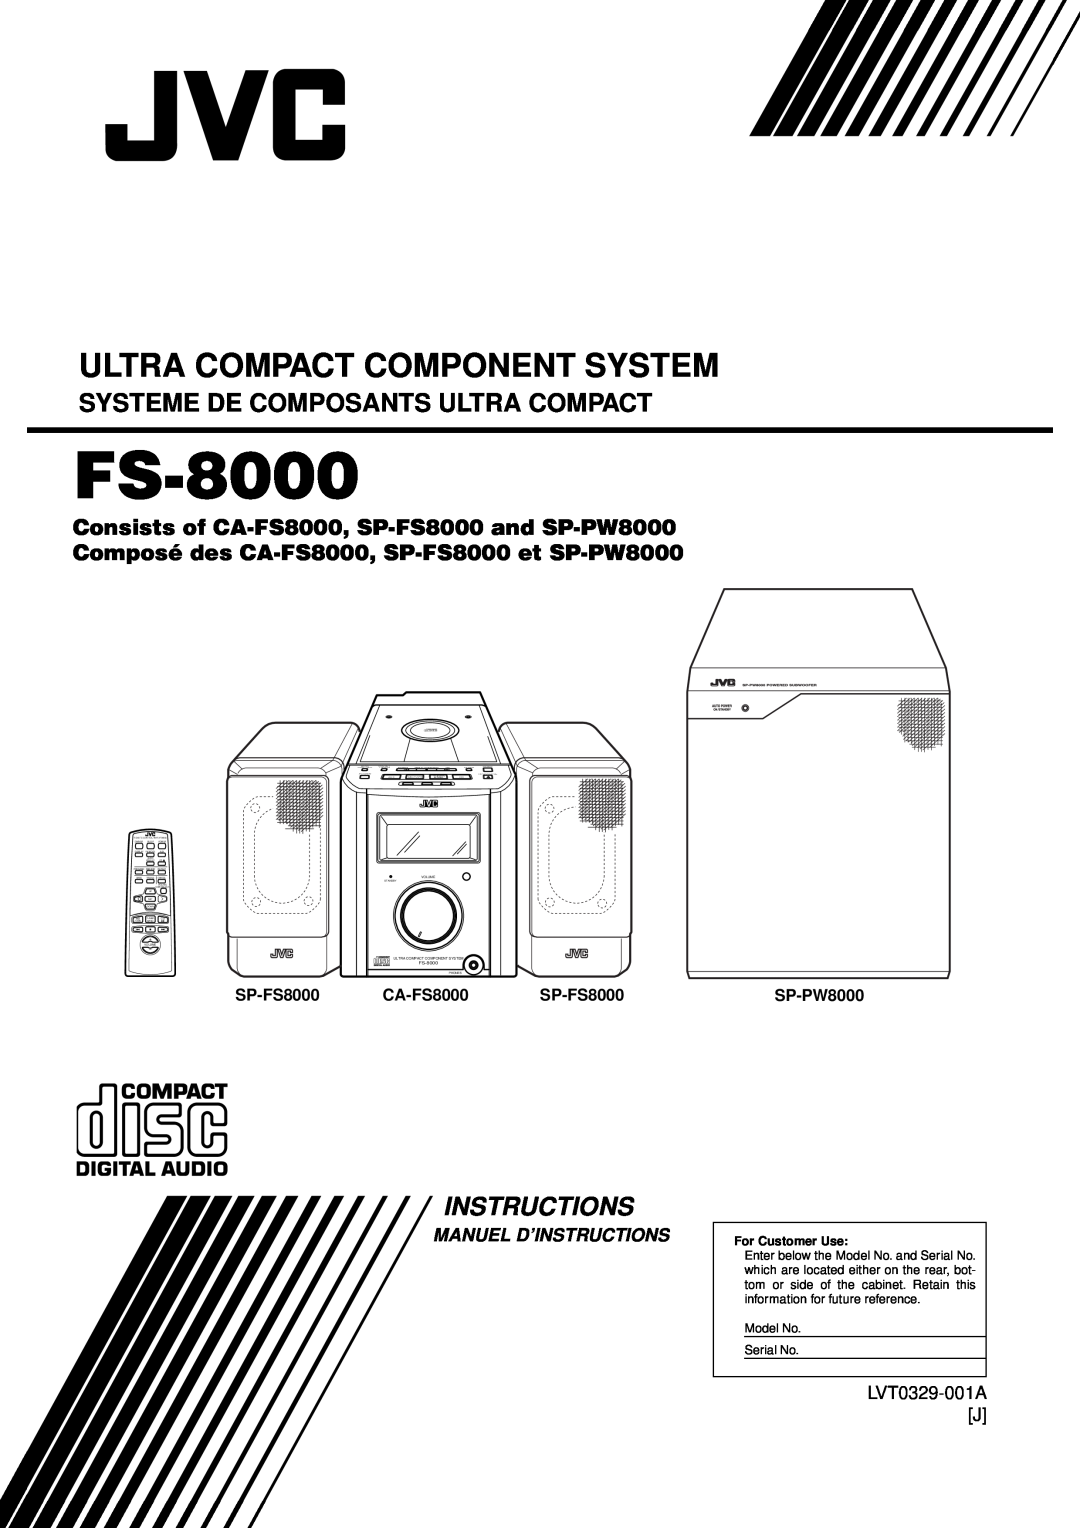 JVC FS-8000 manual Systeme De Composants Ultra Compact, Manuel D’Instructions, SP-FS8000, CA-FS8000, LVT0329-001AJ 